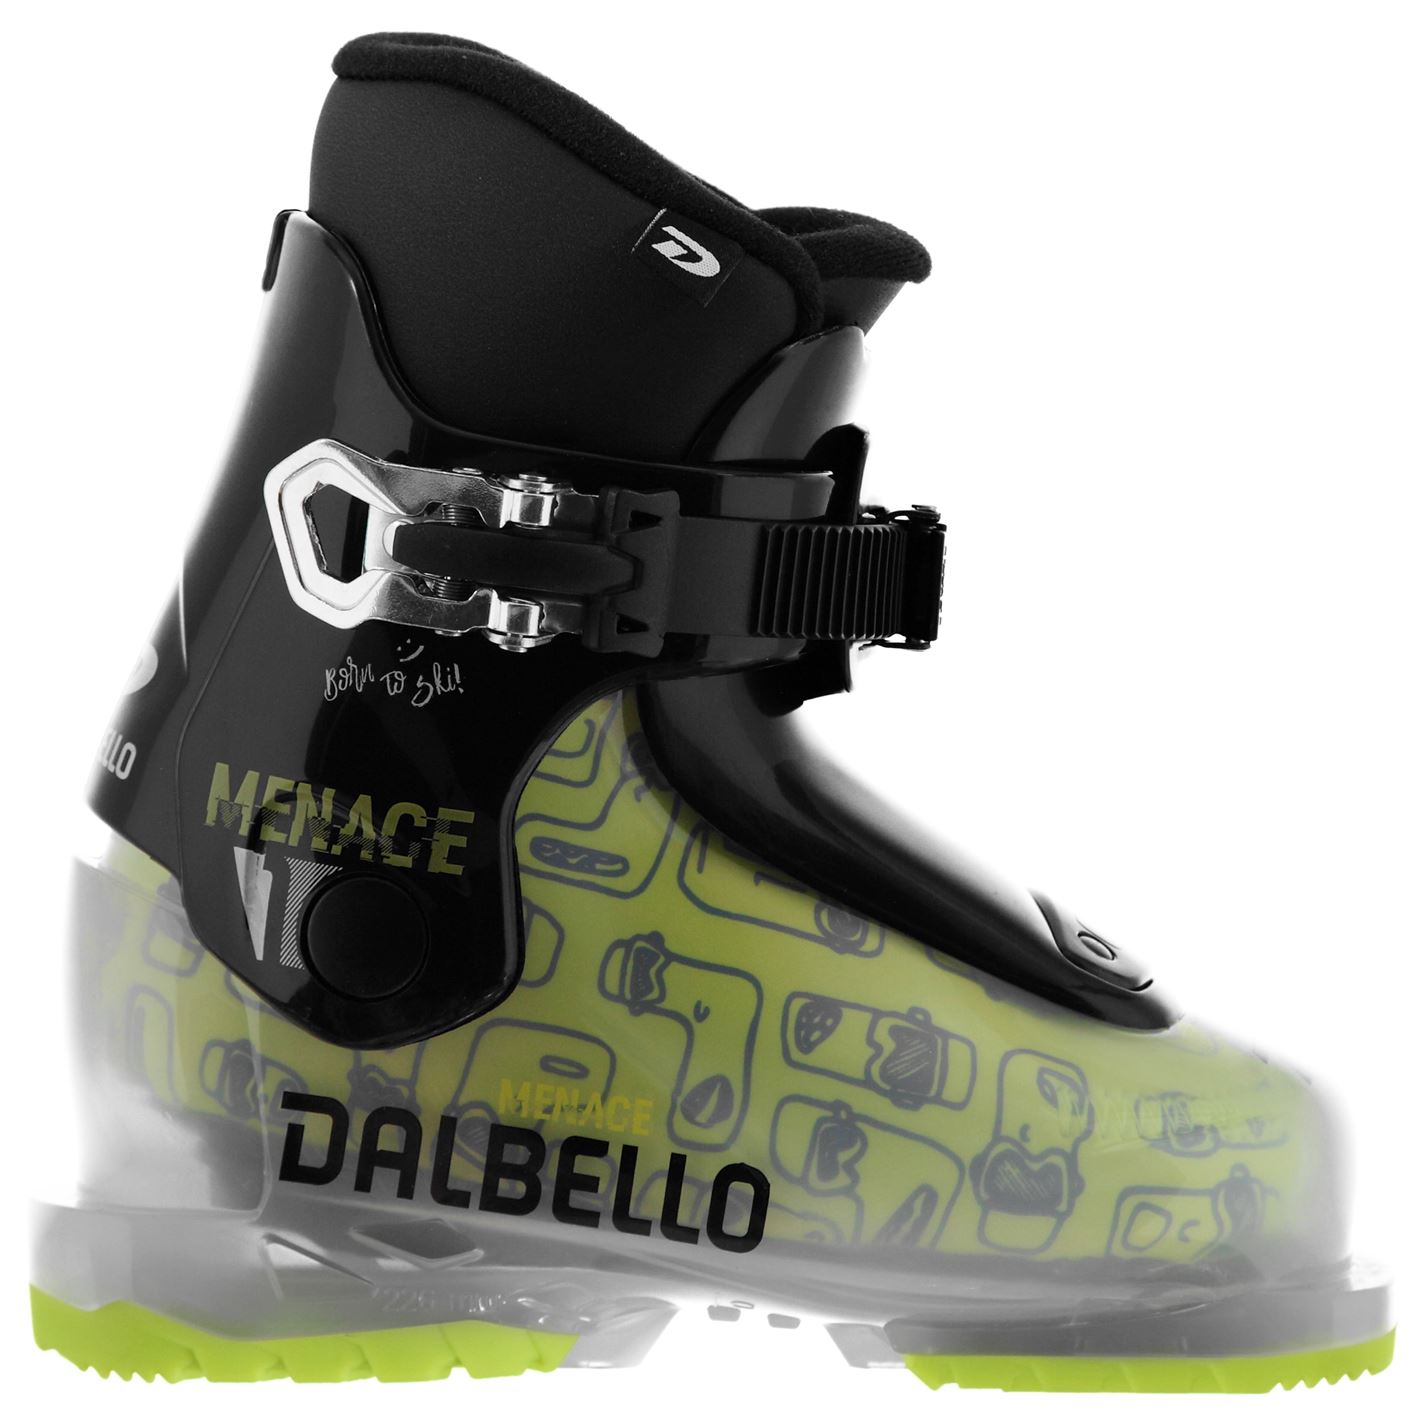 Clapari ski Dalbello Menace 1 pentru Copii trans negru